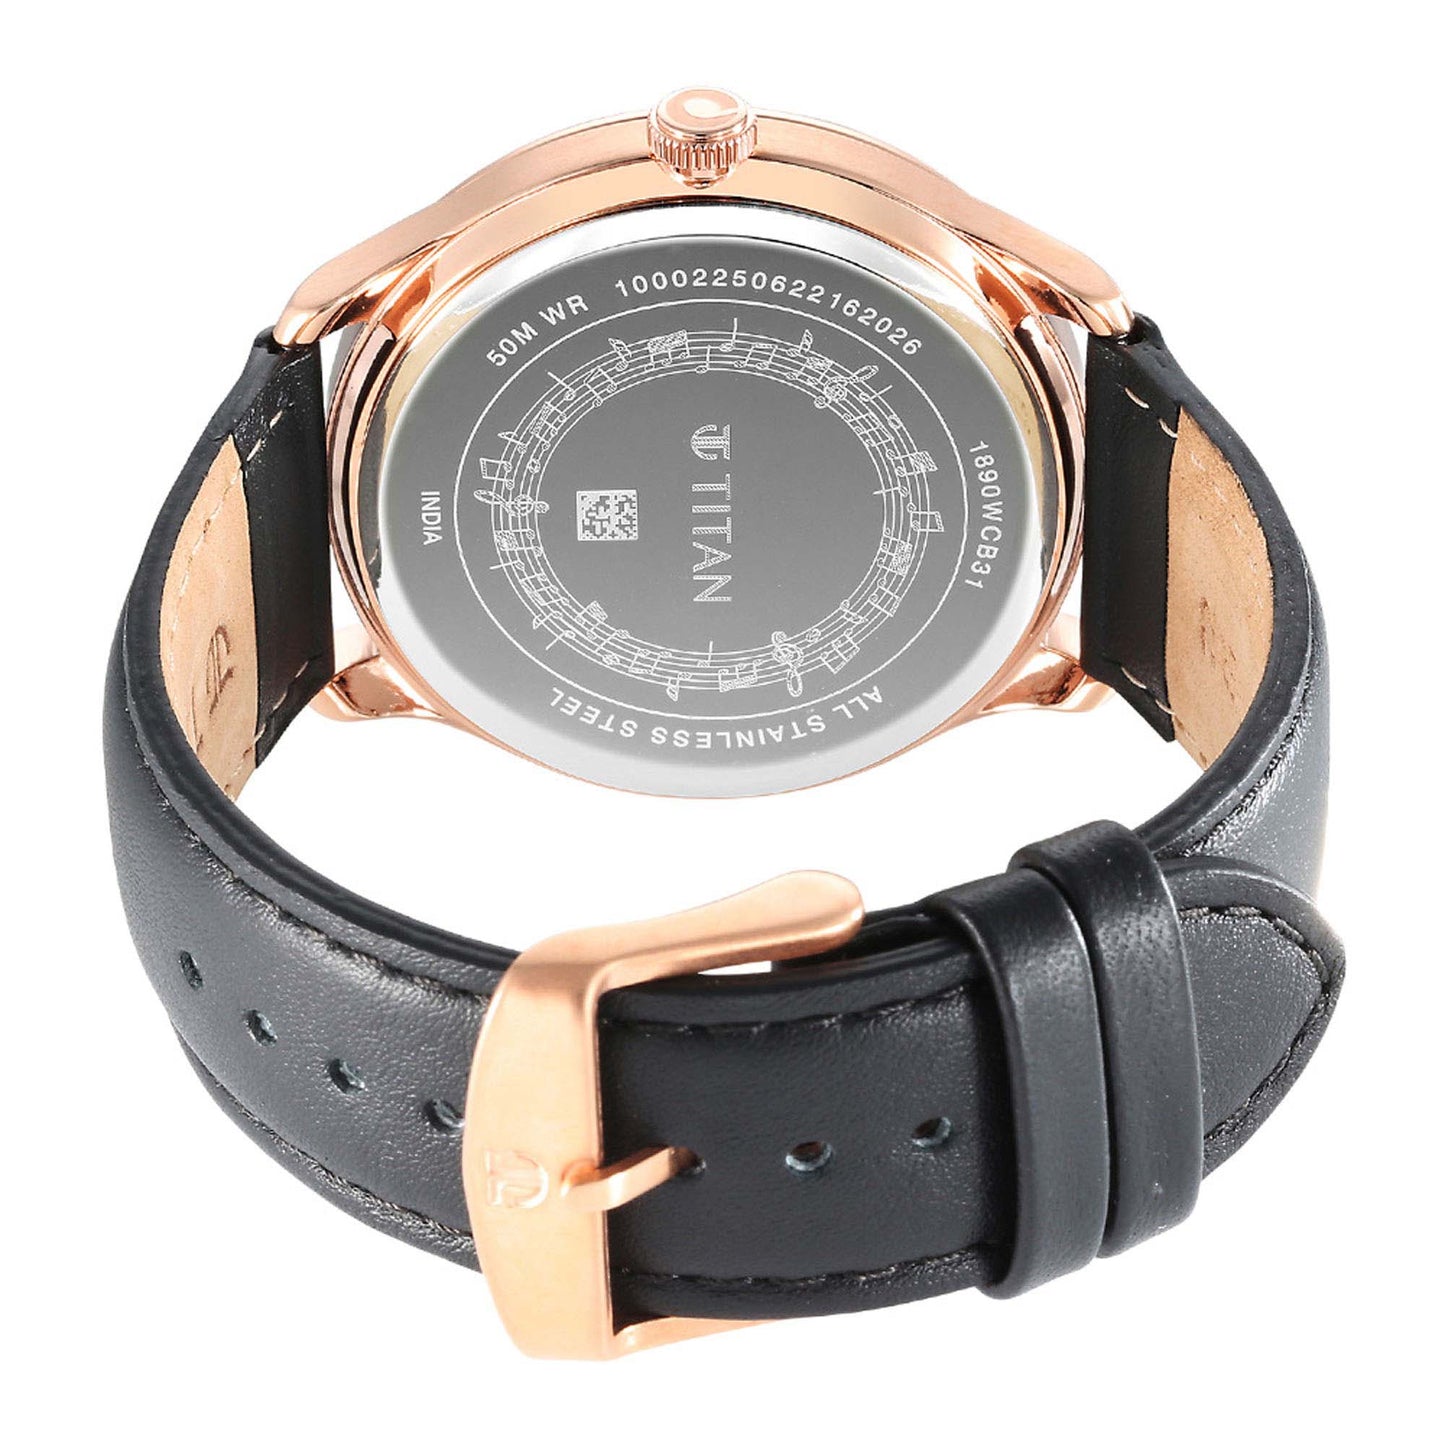 Titan Quartet Brown Dial Analog Leather Strap watch for Men